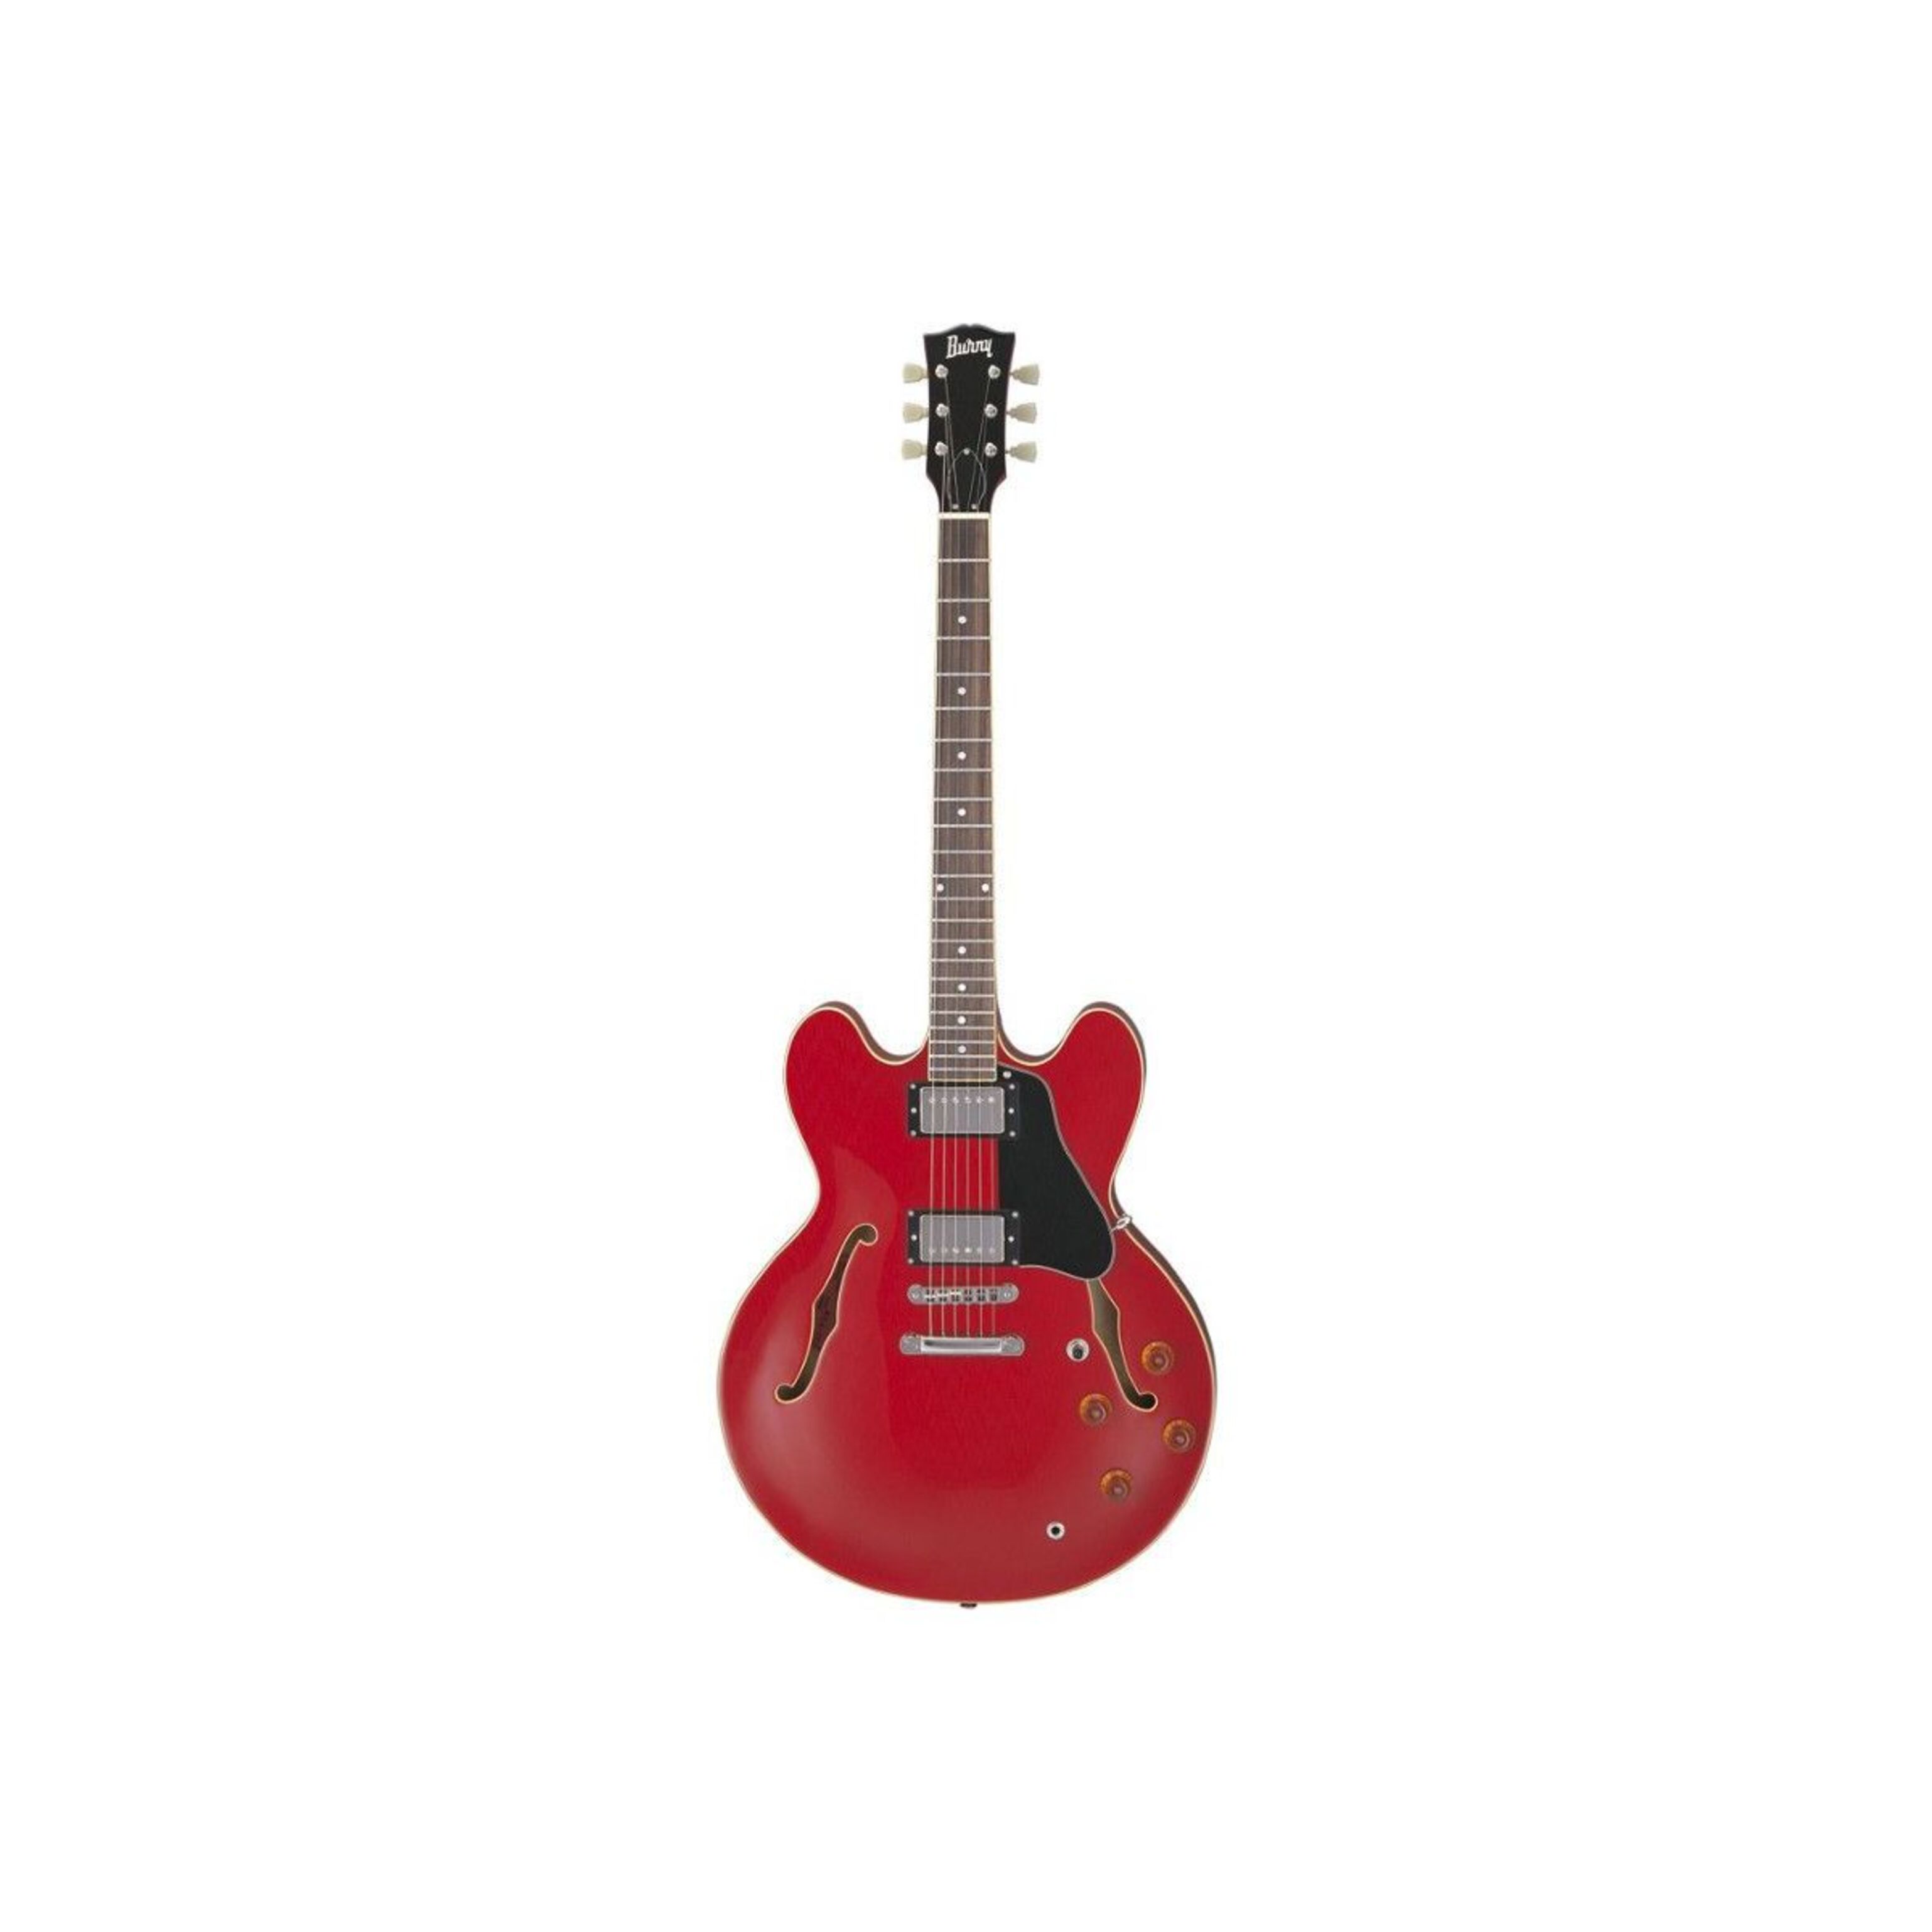 Полуакустические гитары Burny RSA70 CR (кейс в комплекте) полуакустические гитары ibanez ag95qa dbs